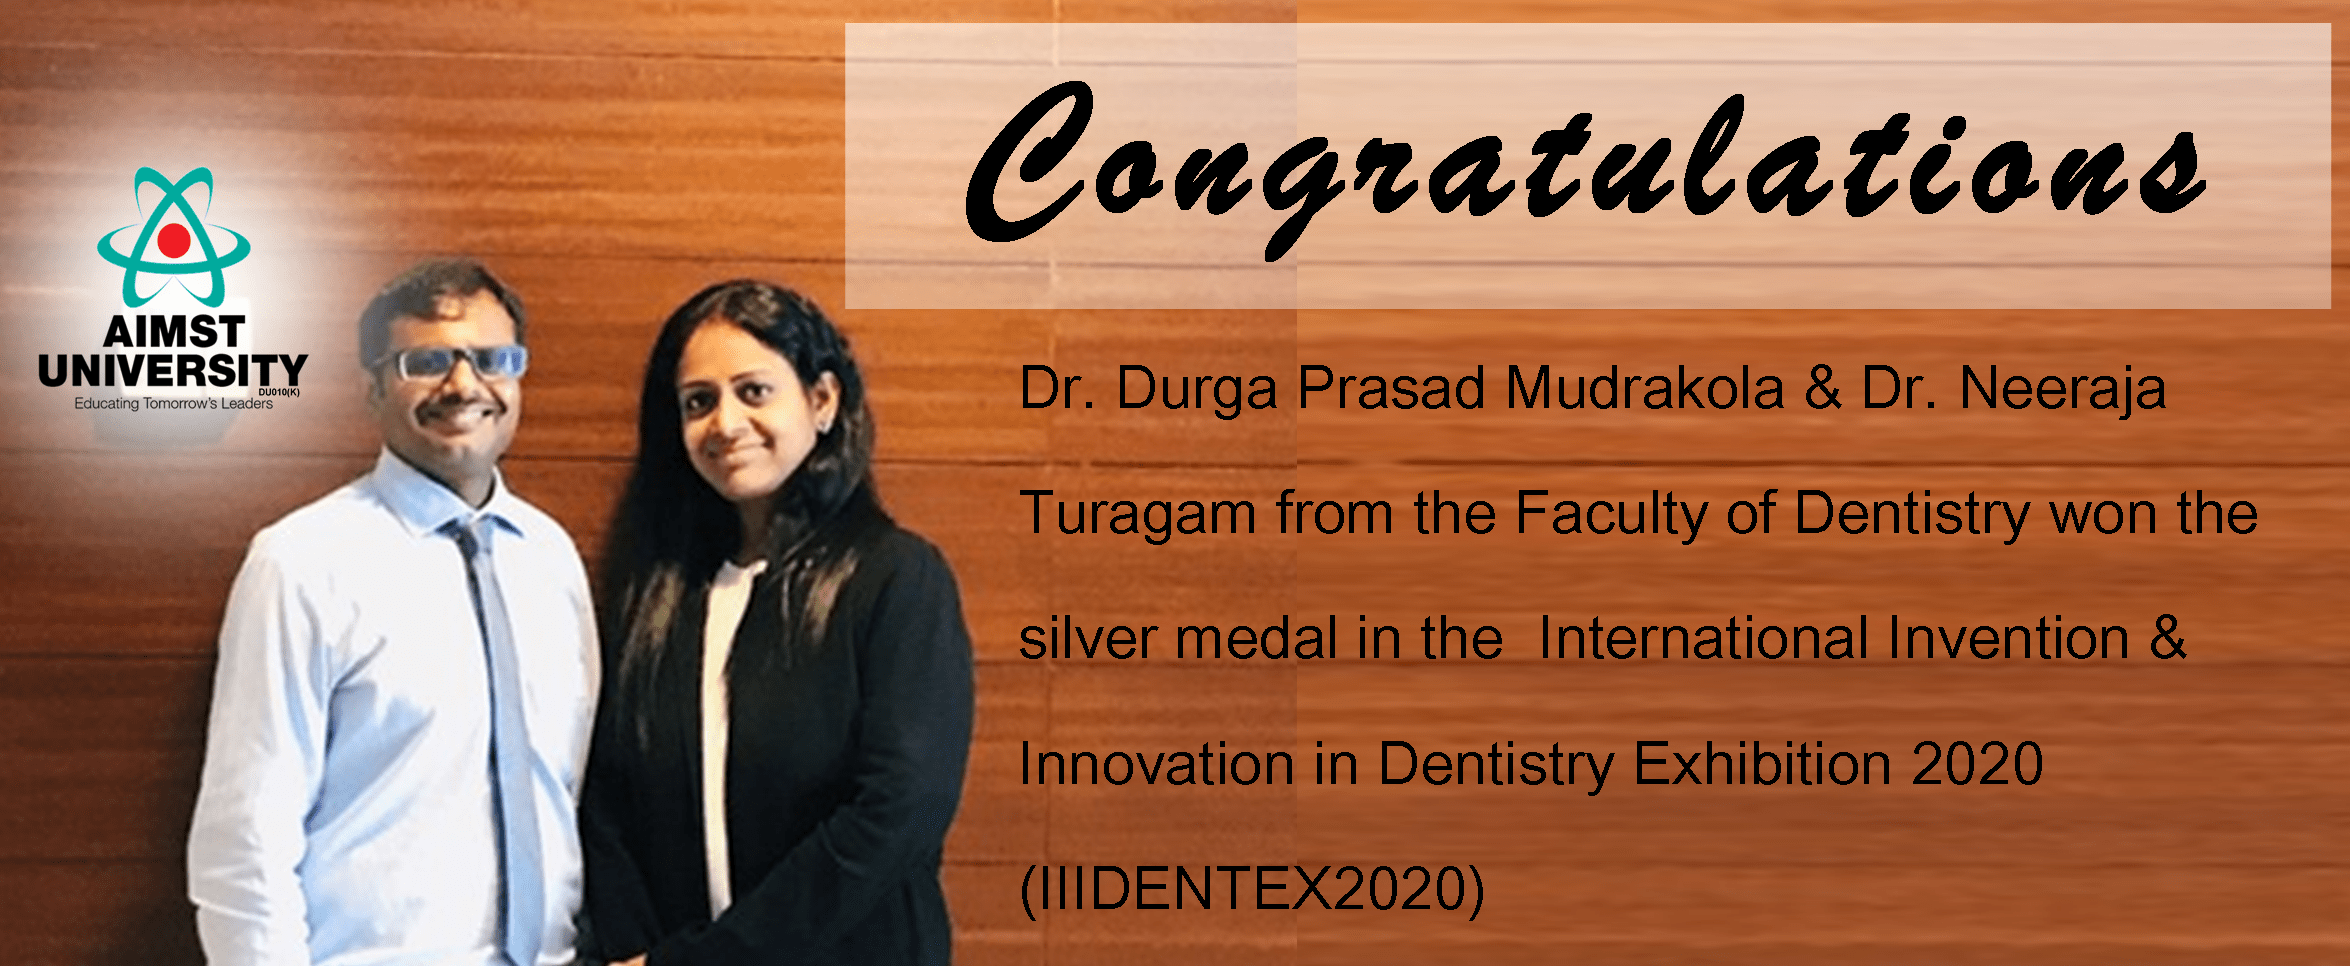 Dr. Durga Prasad Mudrakola & Dr. Neeraja Turagam